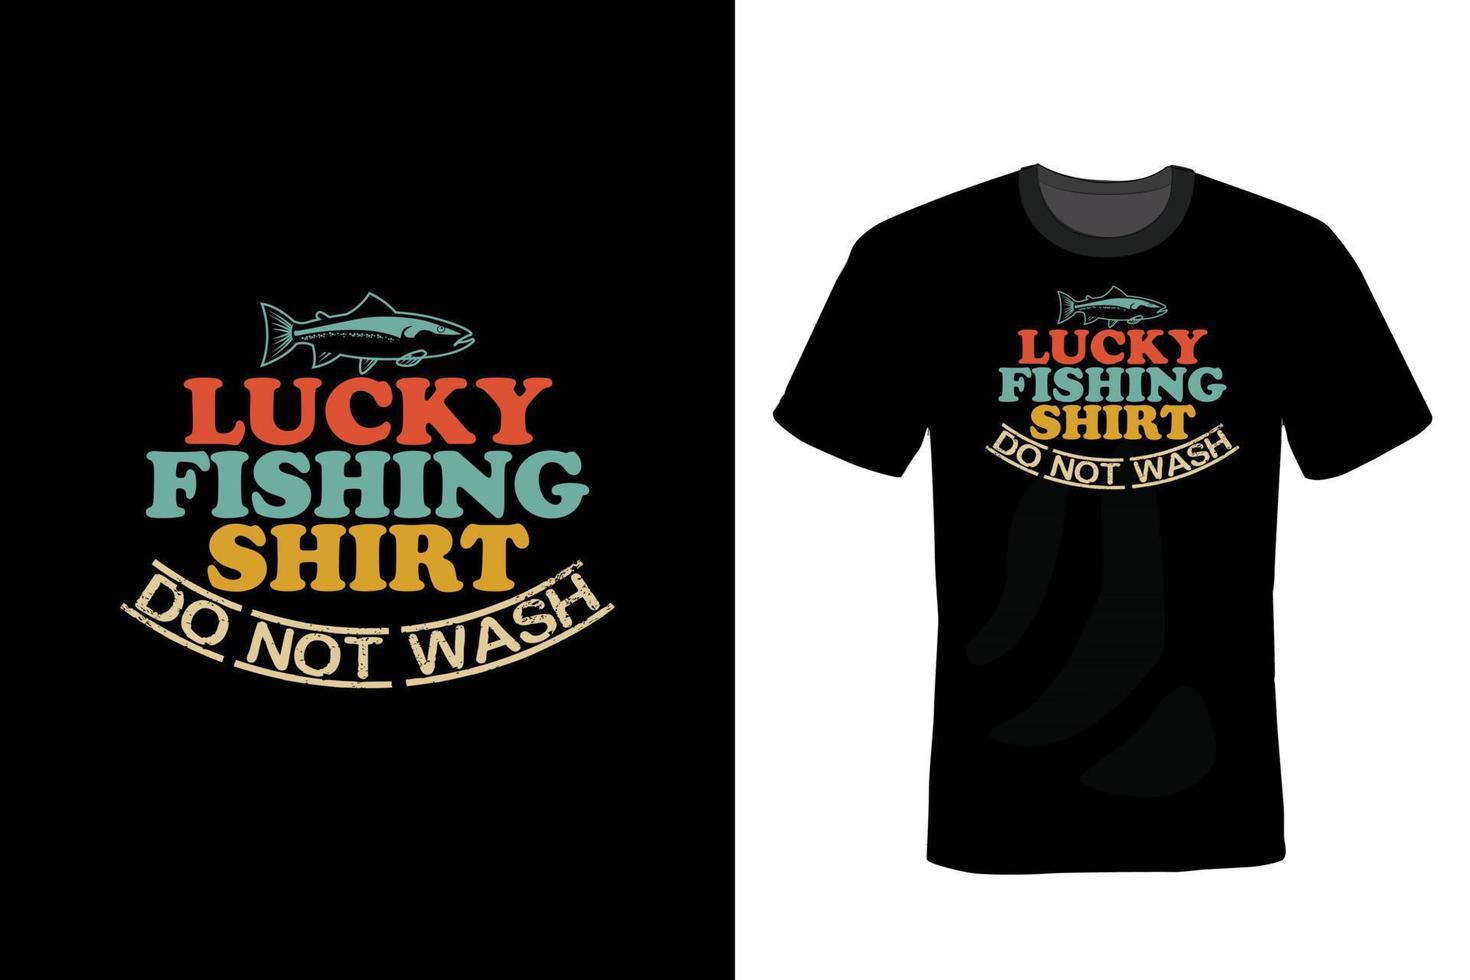 Fishing T shirt design, vintage, typography vector